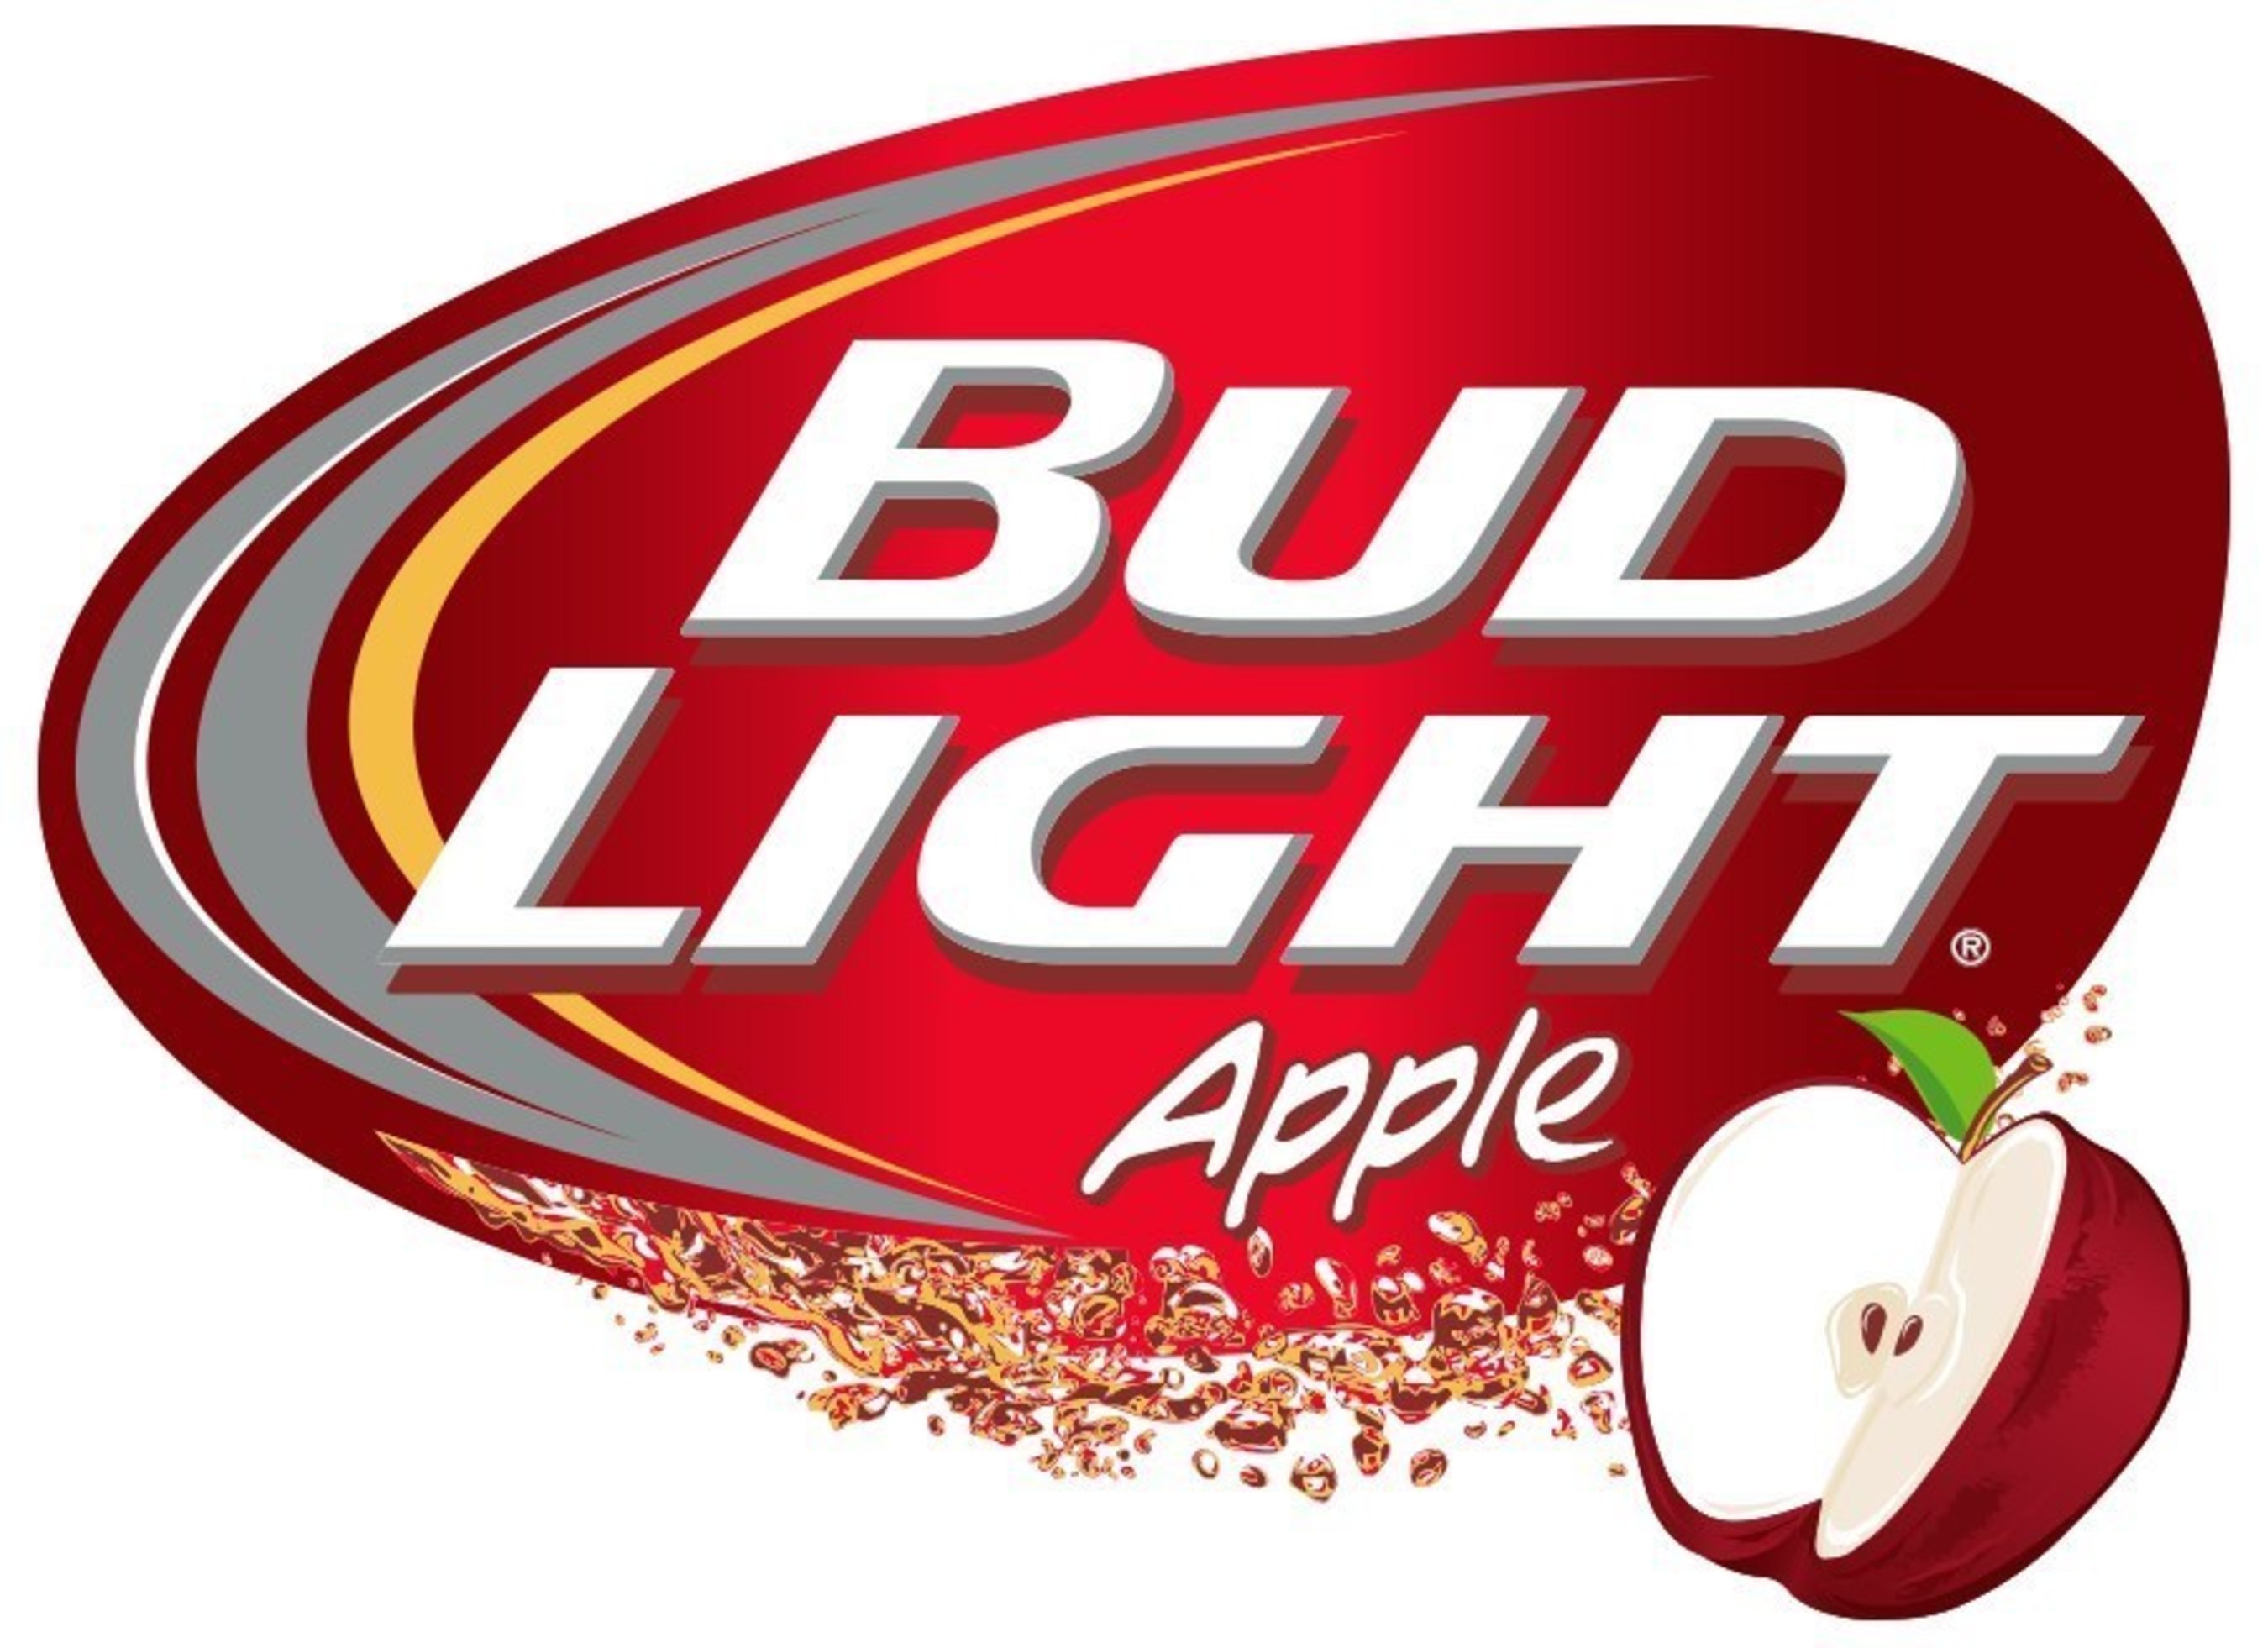 A New Crisp Taste For The Season Introducing Bud Light Apple.